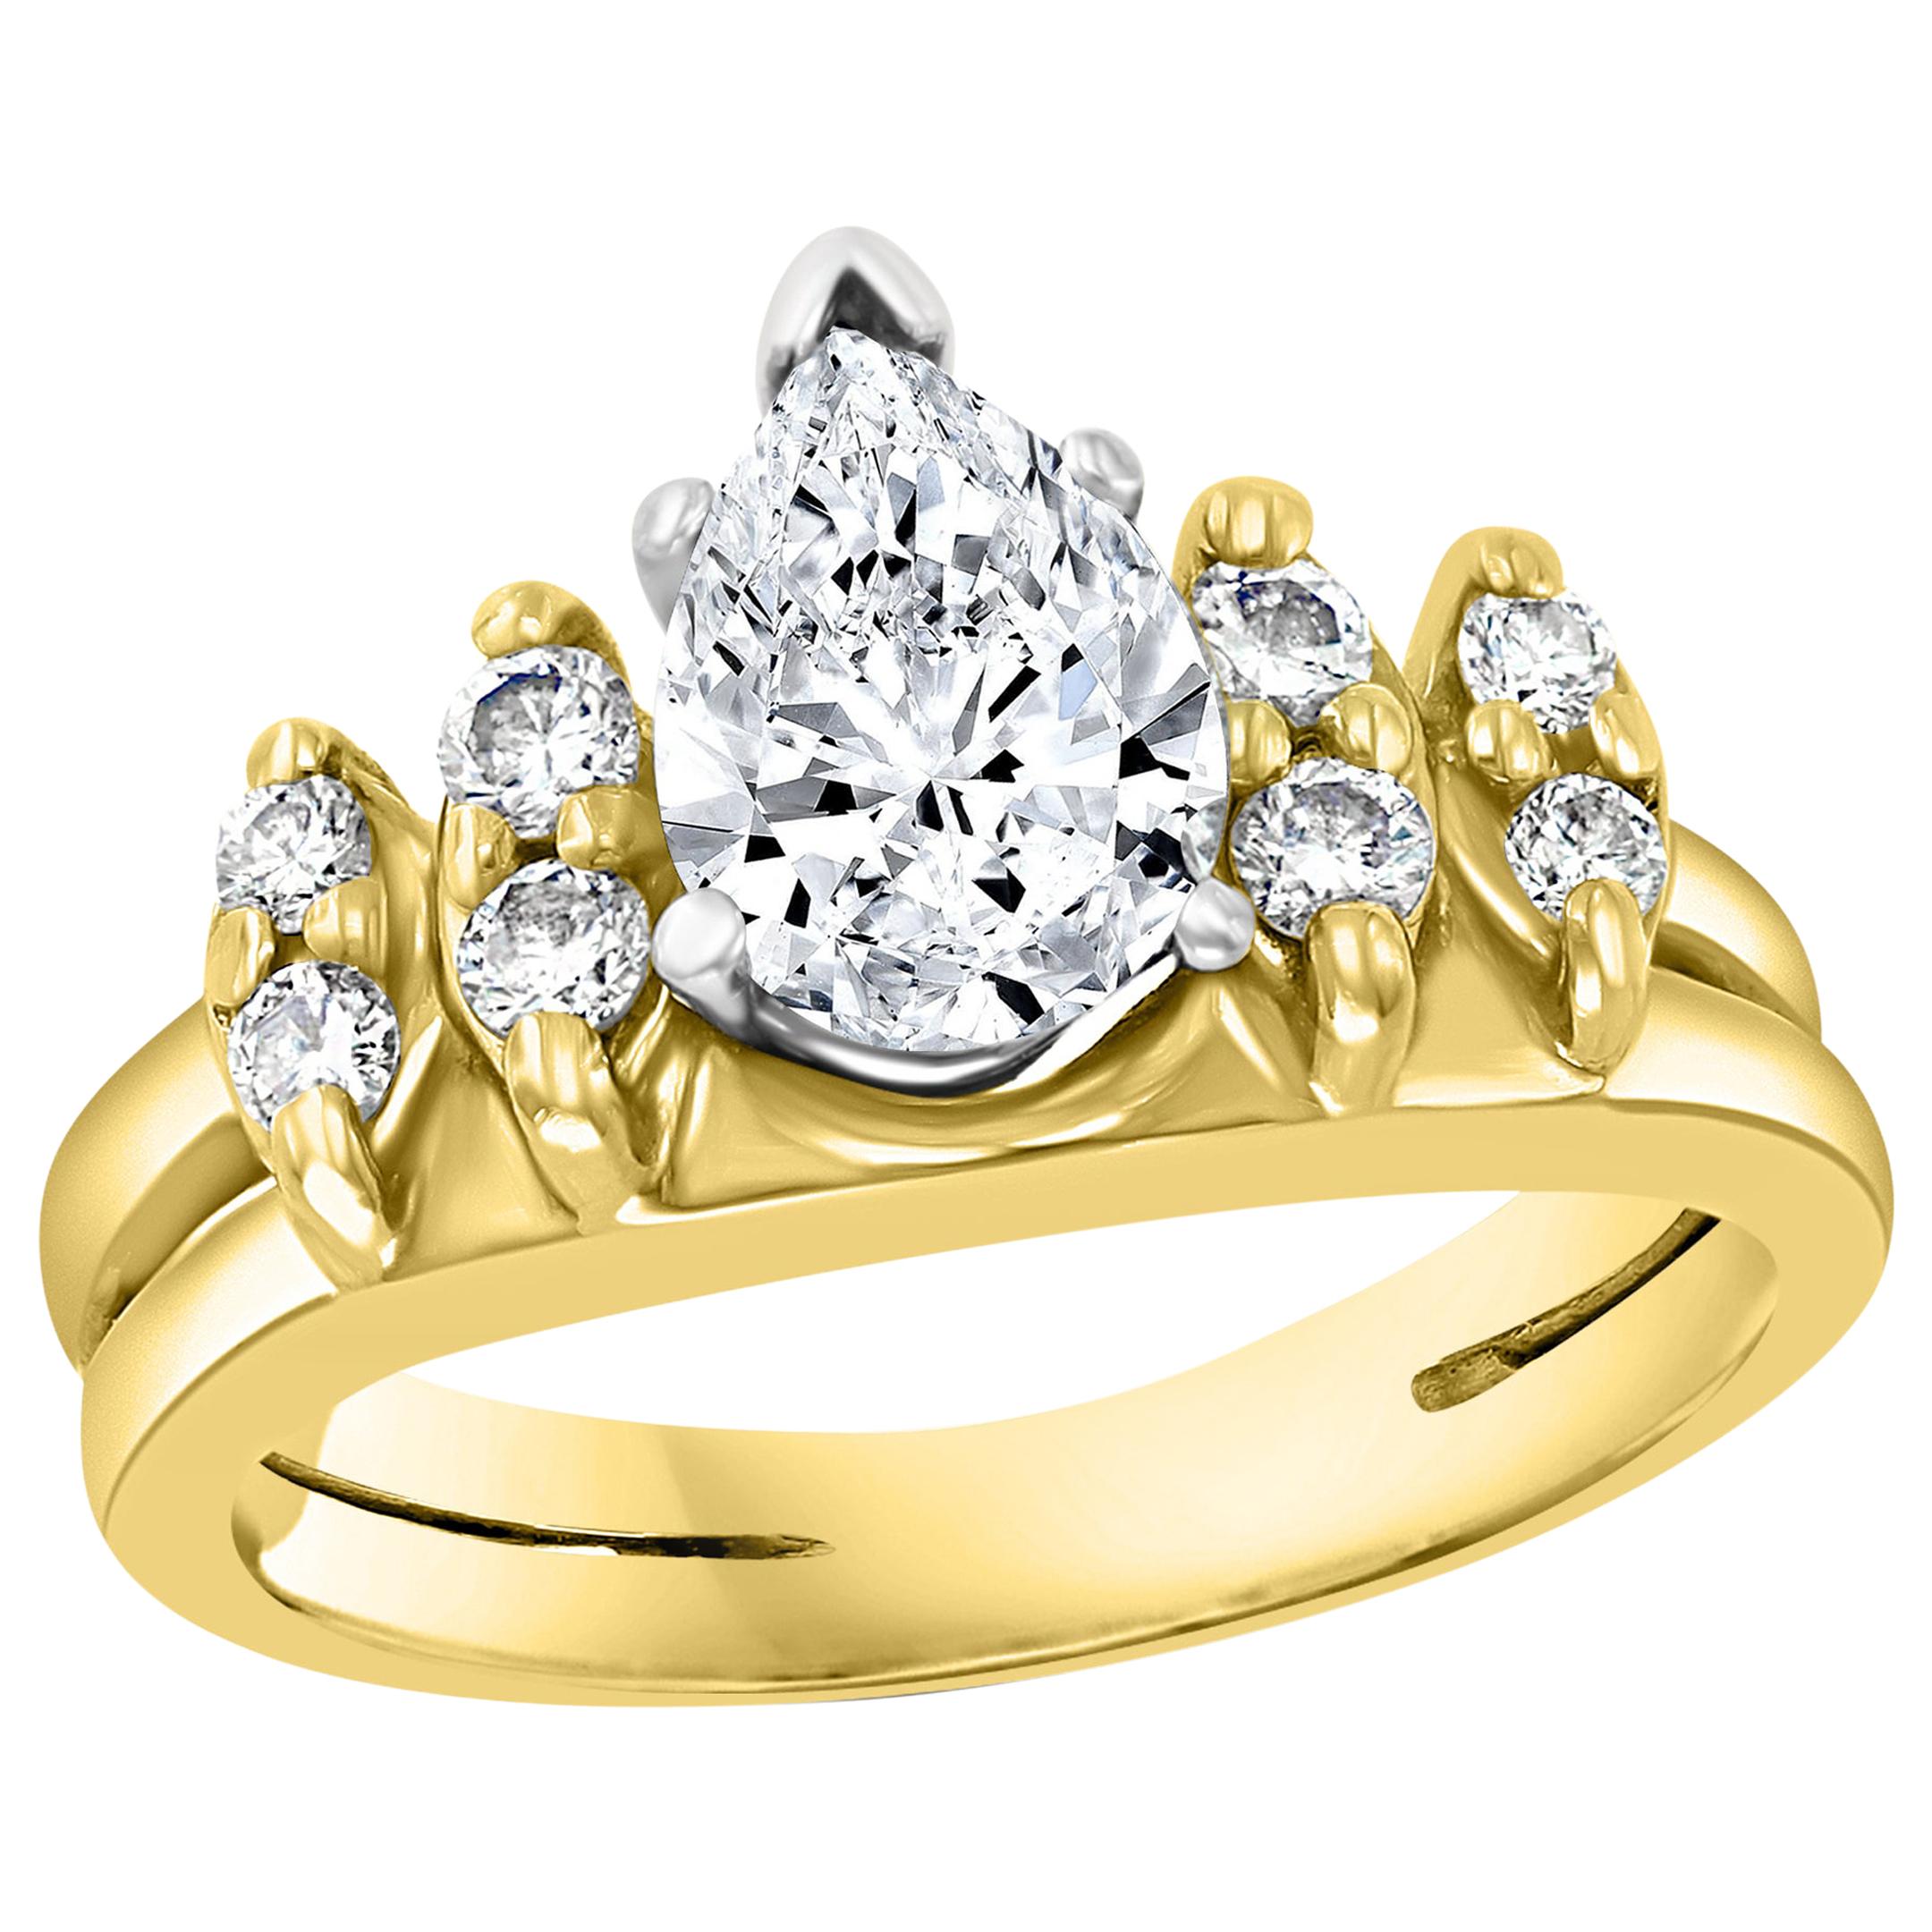 1.0 Carat Pear Shape Center Diamond Engagement 14 Karat Yellow Gold Ring For Sale